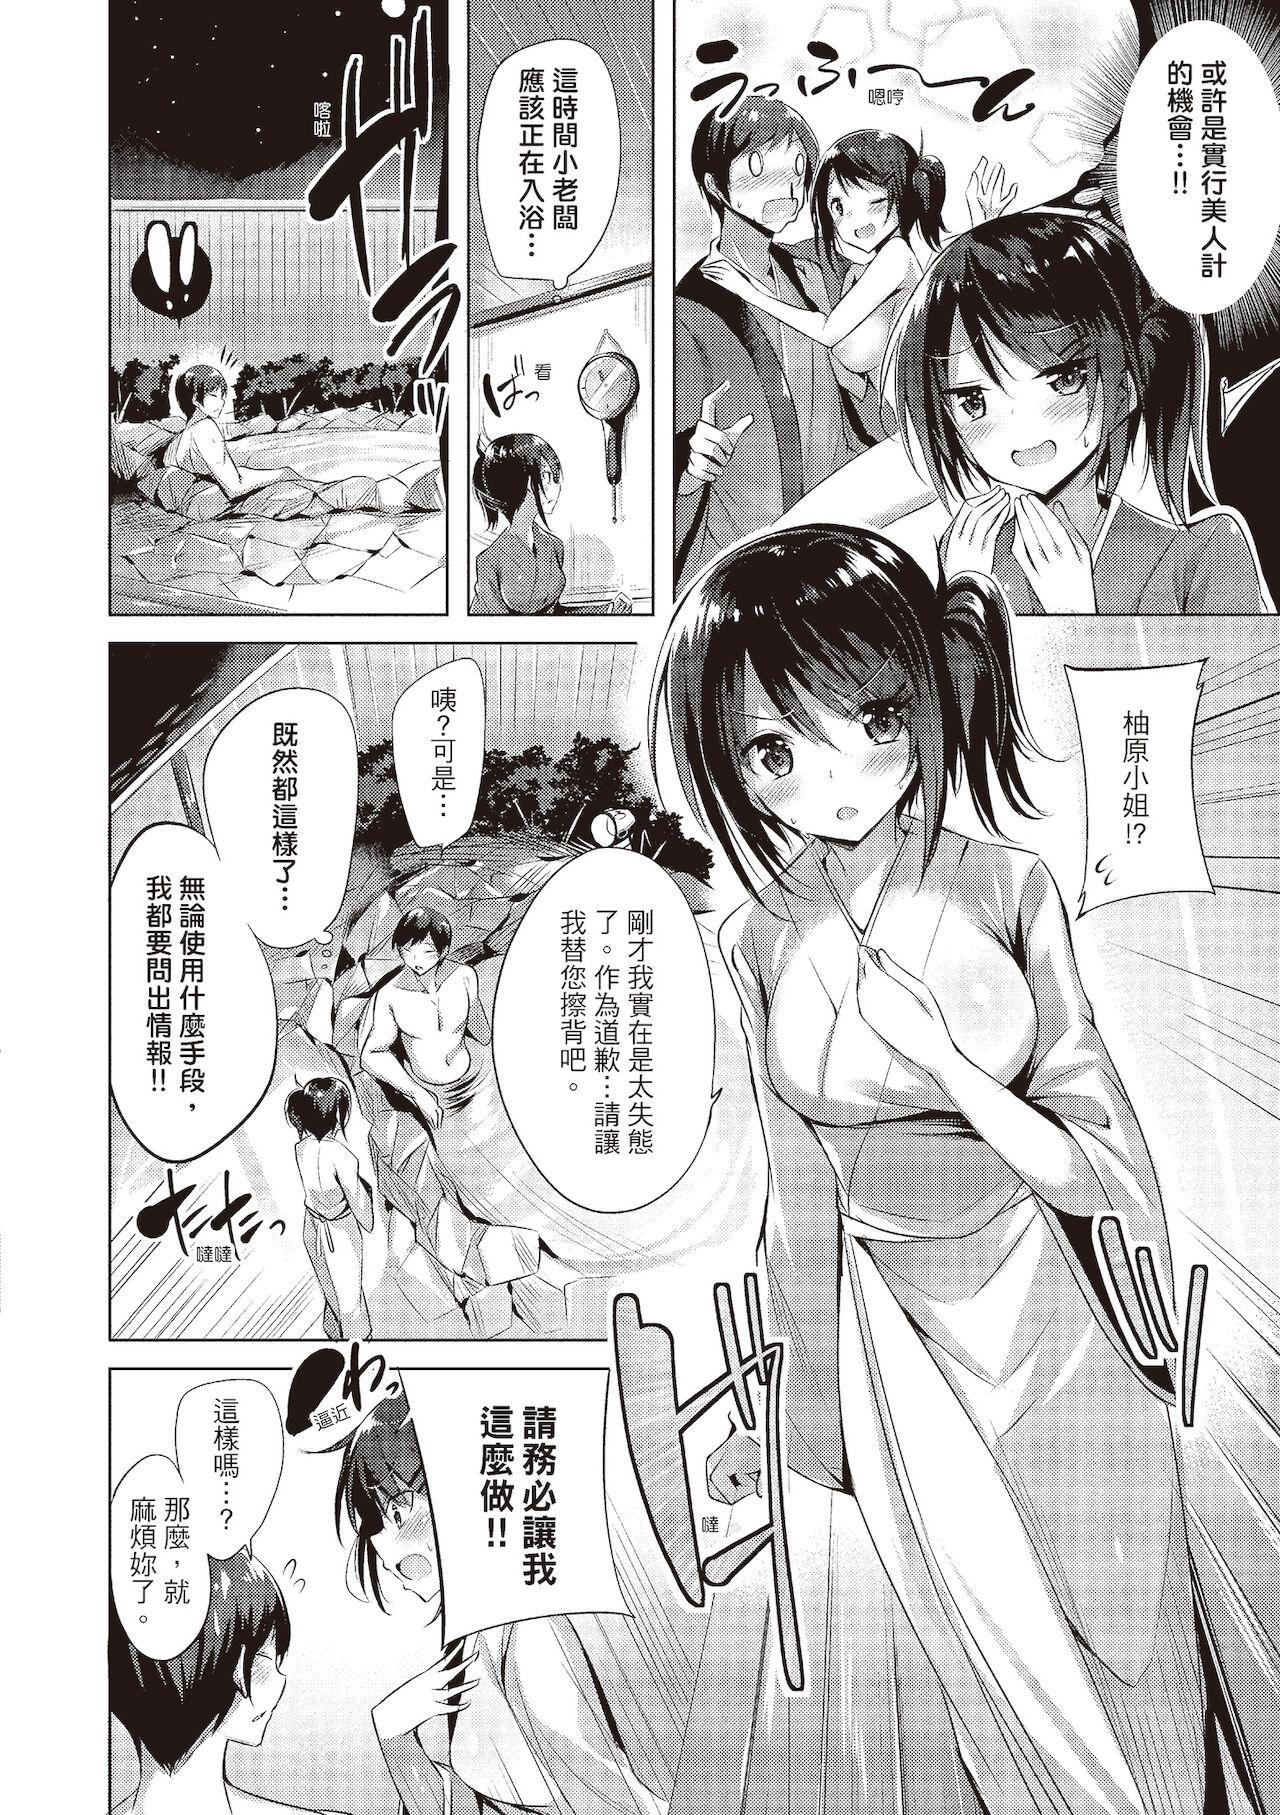 SukiSuki Machine Gun! - You pull the trigger of my love Machine gun! | 愛上內射機關槍! 47